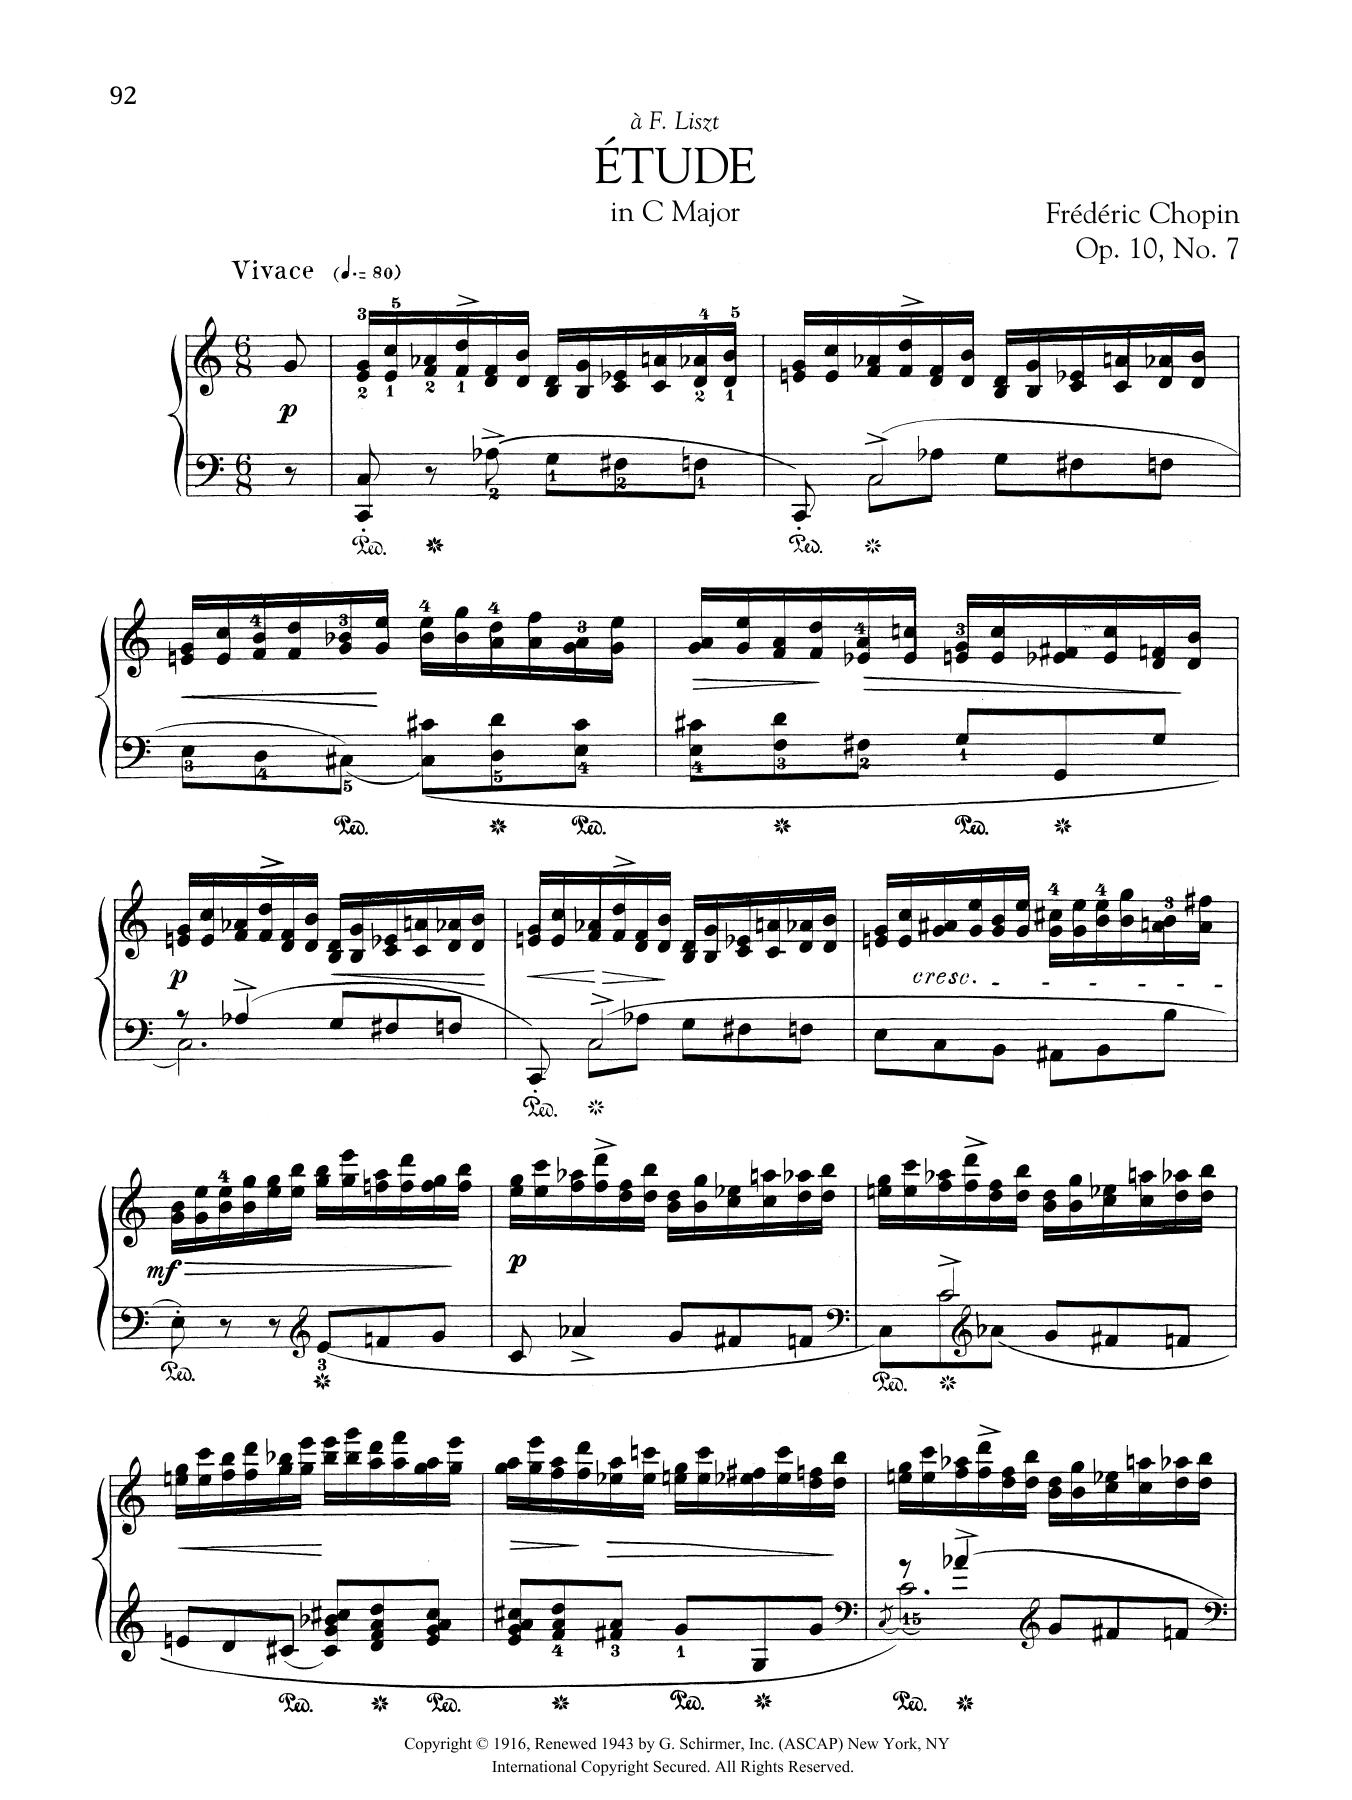 Download Frederic Chopin Etude in C Major, Op. 10, No. 7 Sheet Music